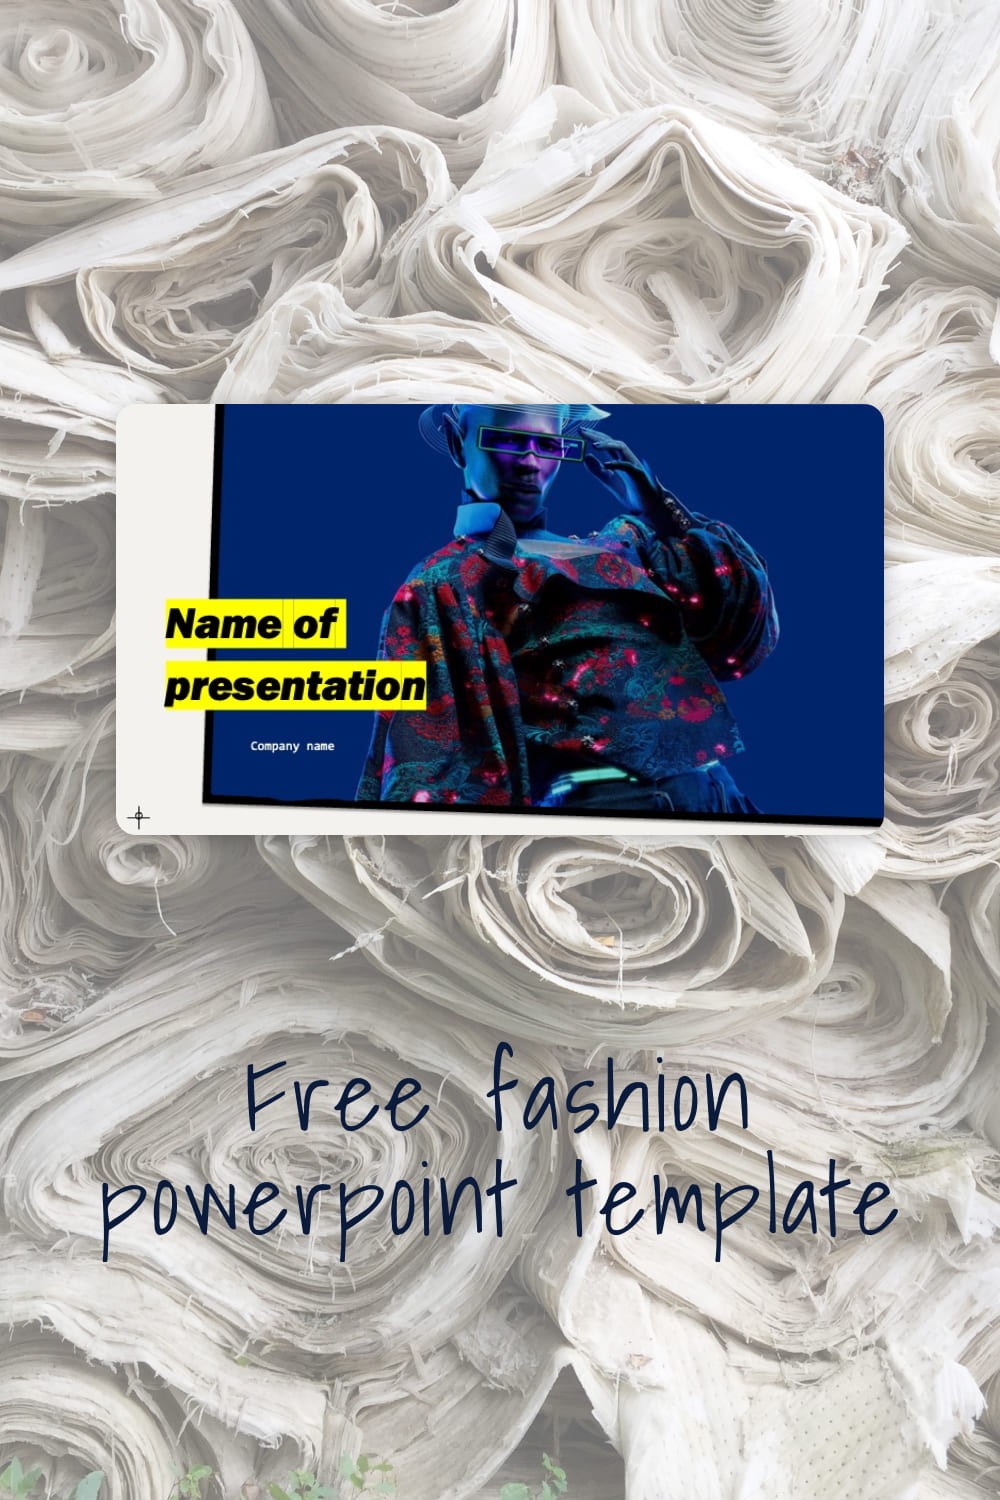 Pinterest Free Fashion Powerpoint Template.